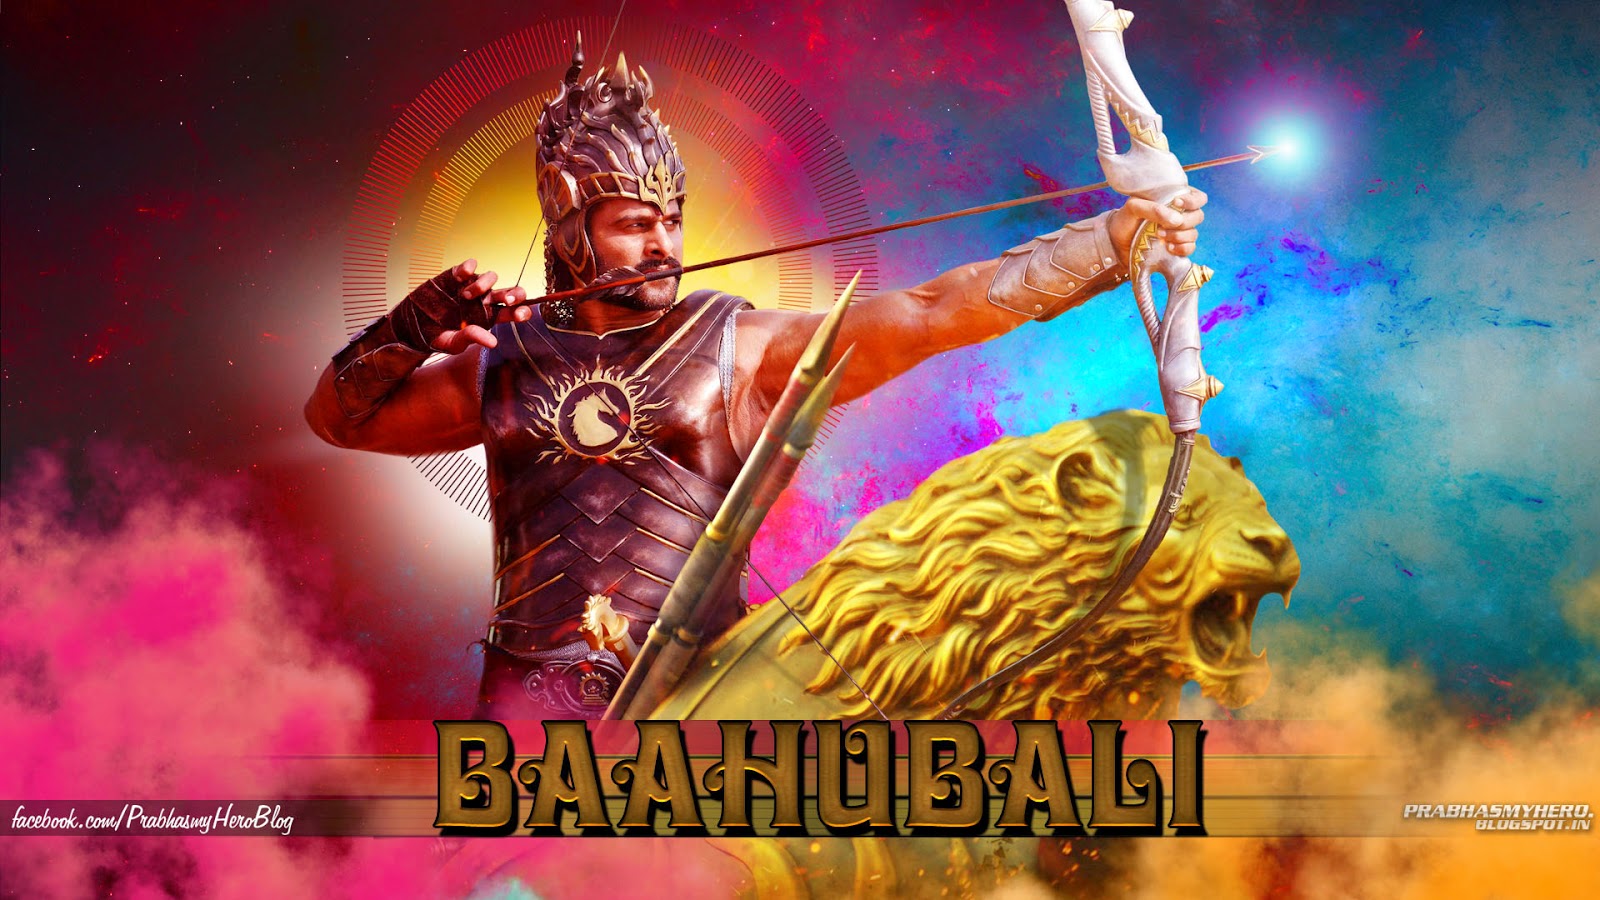 fond d'écran baahubali,mythologie,personnage fictif,film,héros,oeuvre de cg